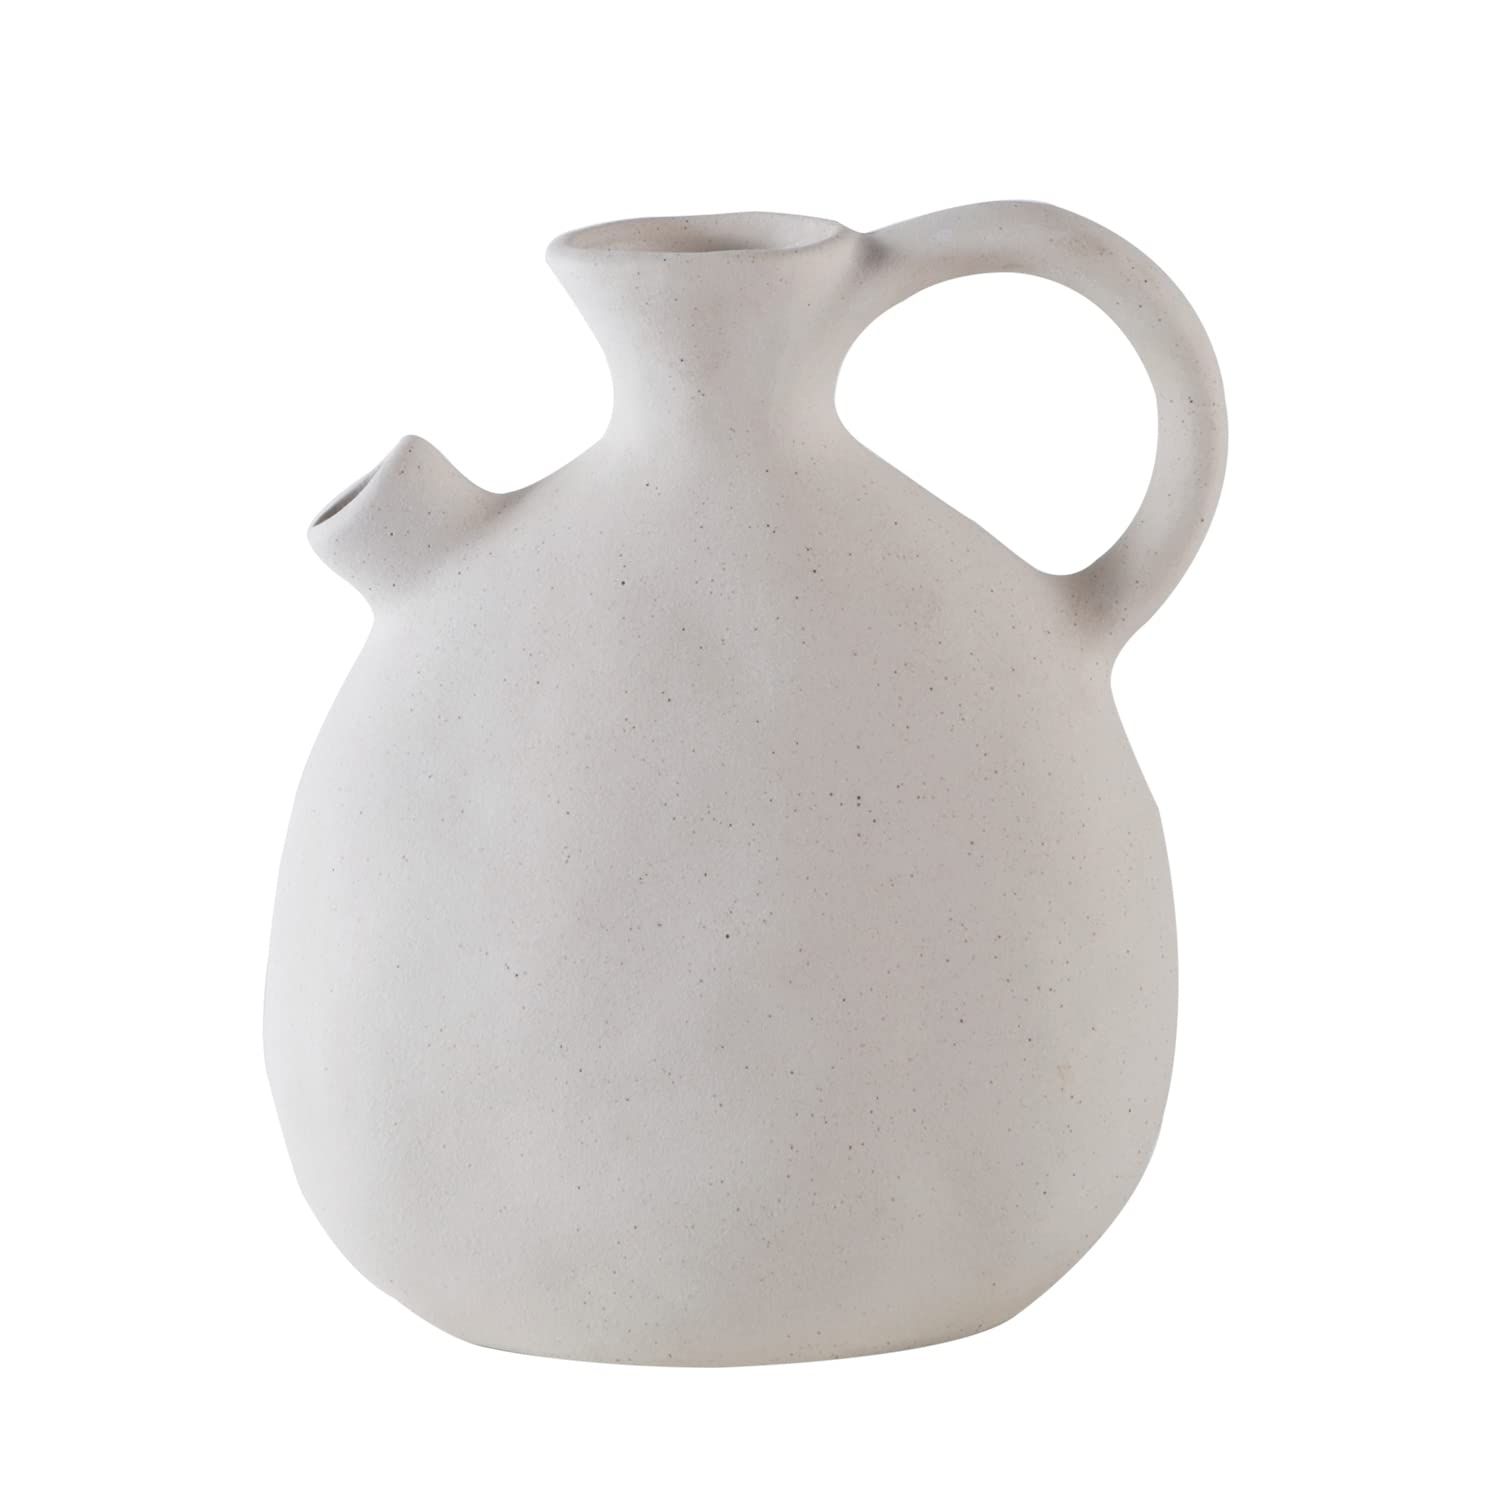 Veraze Handmade Rustic Matte White Ceramic Vase, Jug Pitcher Flower Vase with Handle and Spout, Mode | Amazon (US)